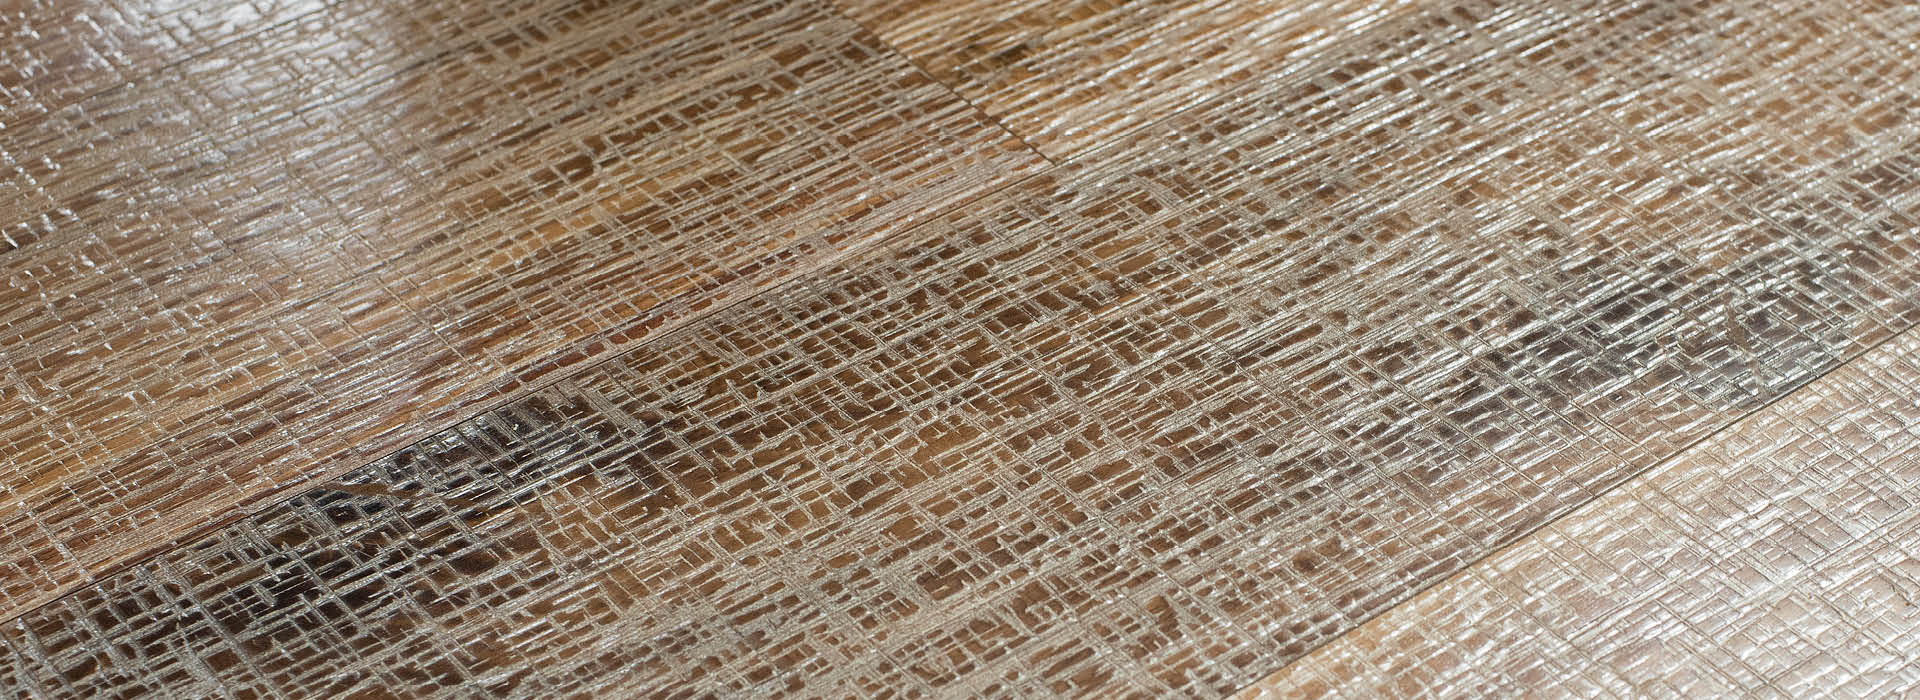 texture-design-cortec-planks-1-2110